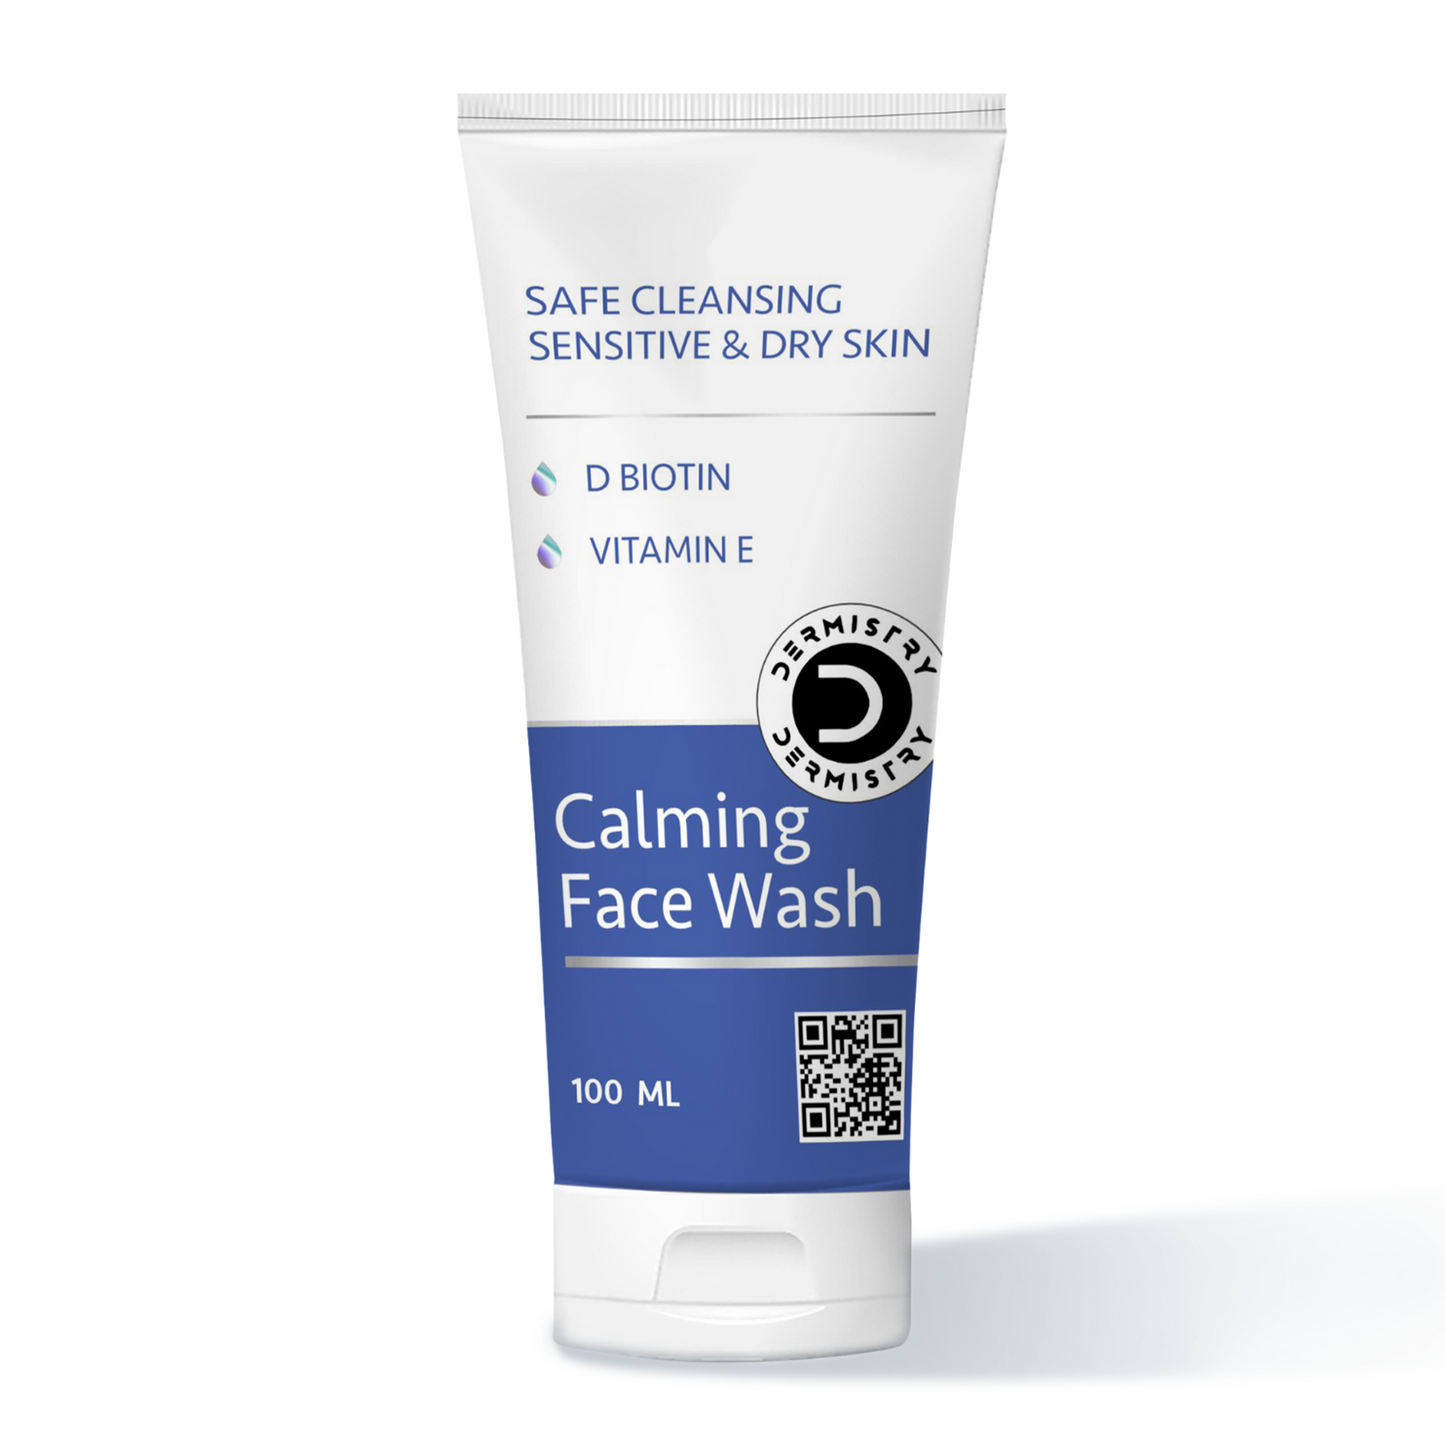 Dermistry Safe Cleansing Sensitive & Dry Skin Calming Face Wash, 100ml